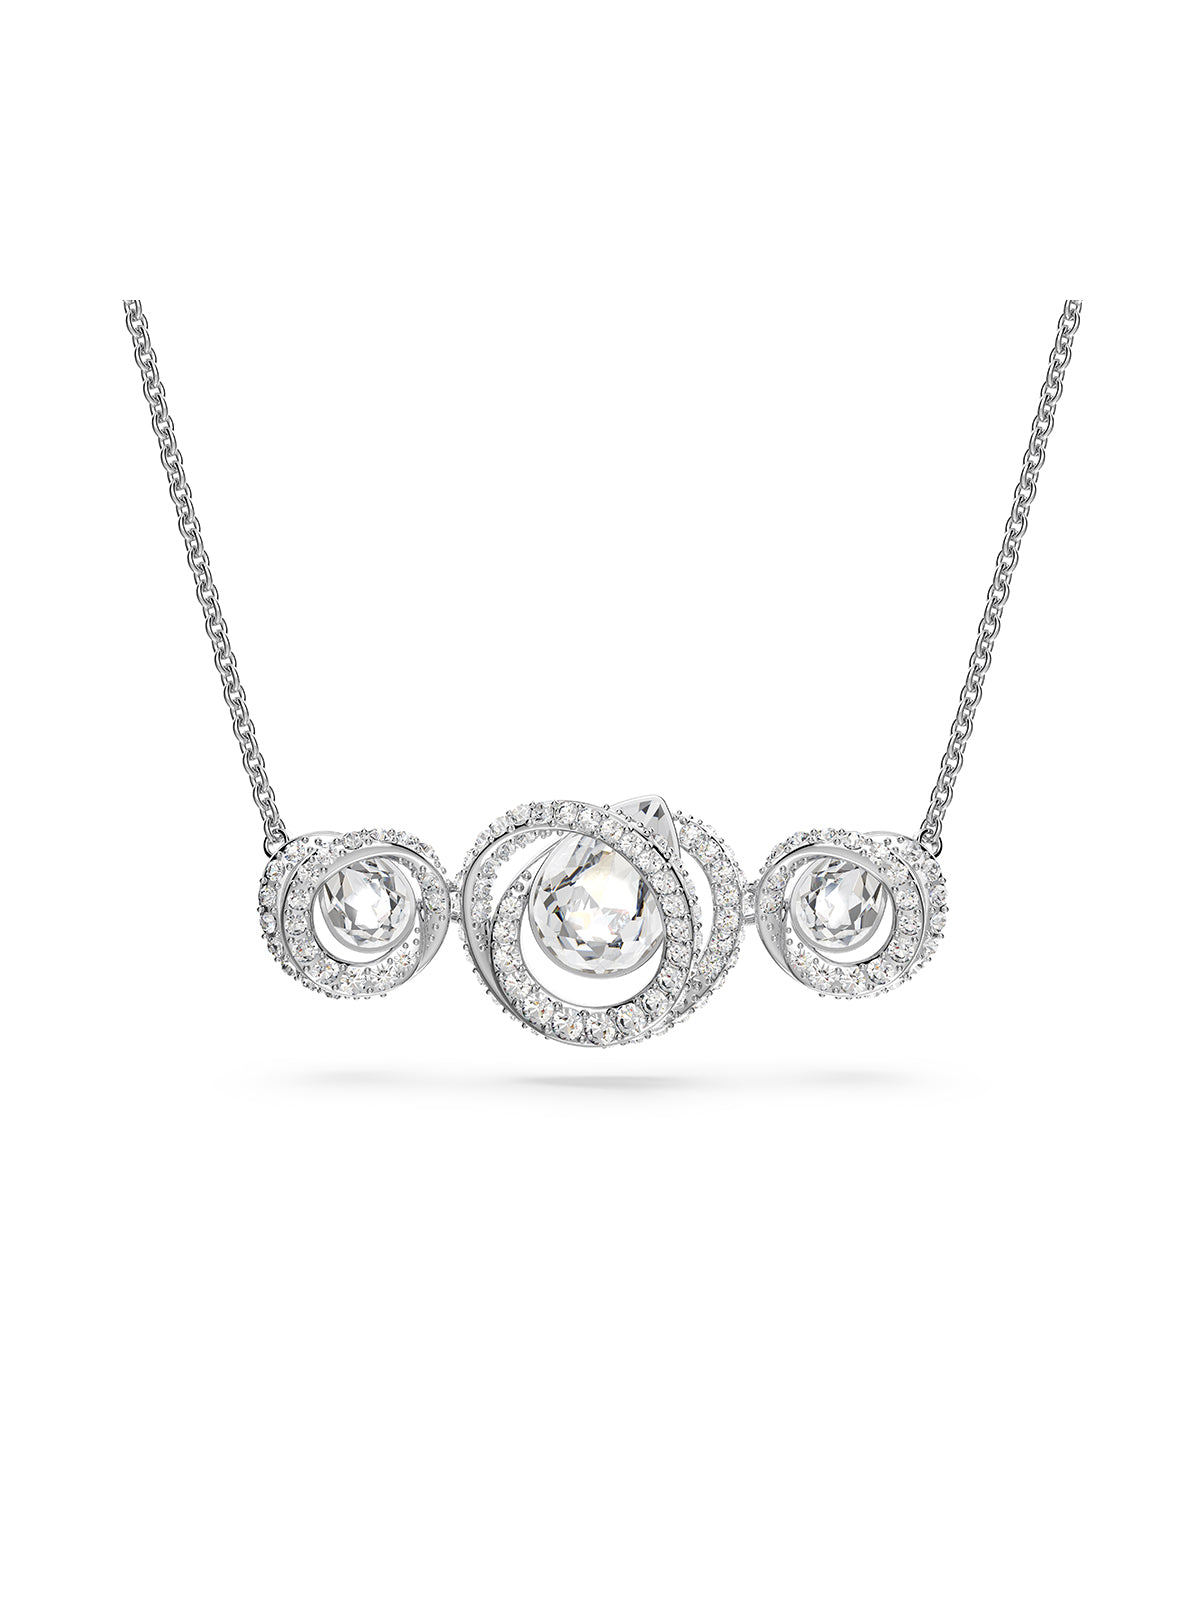 SALE Swarovski Generation White Crystal Necklace 5636587